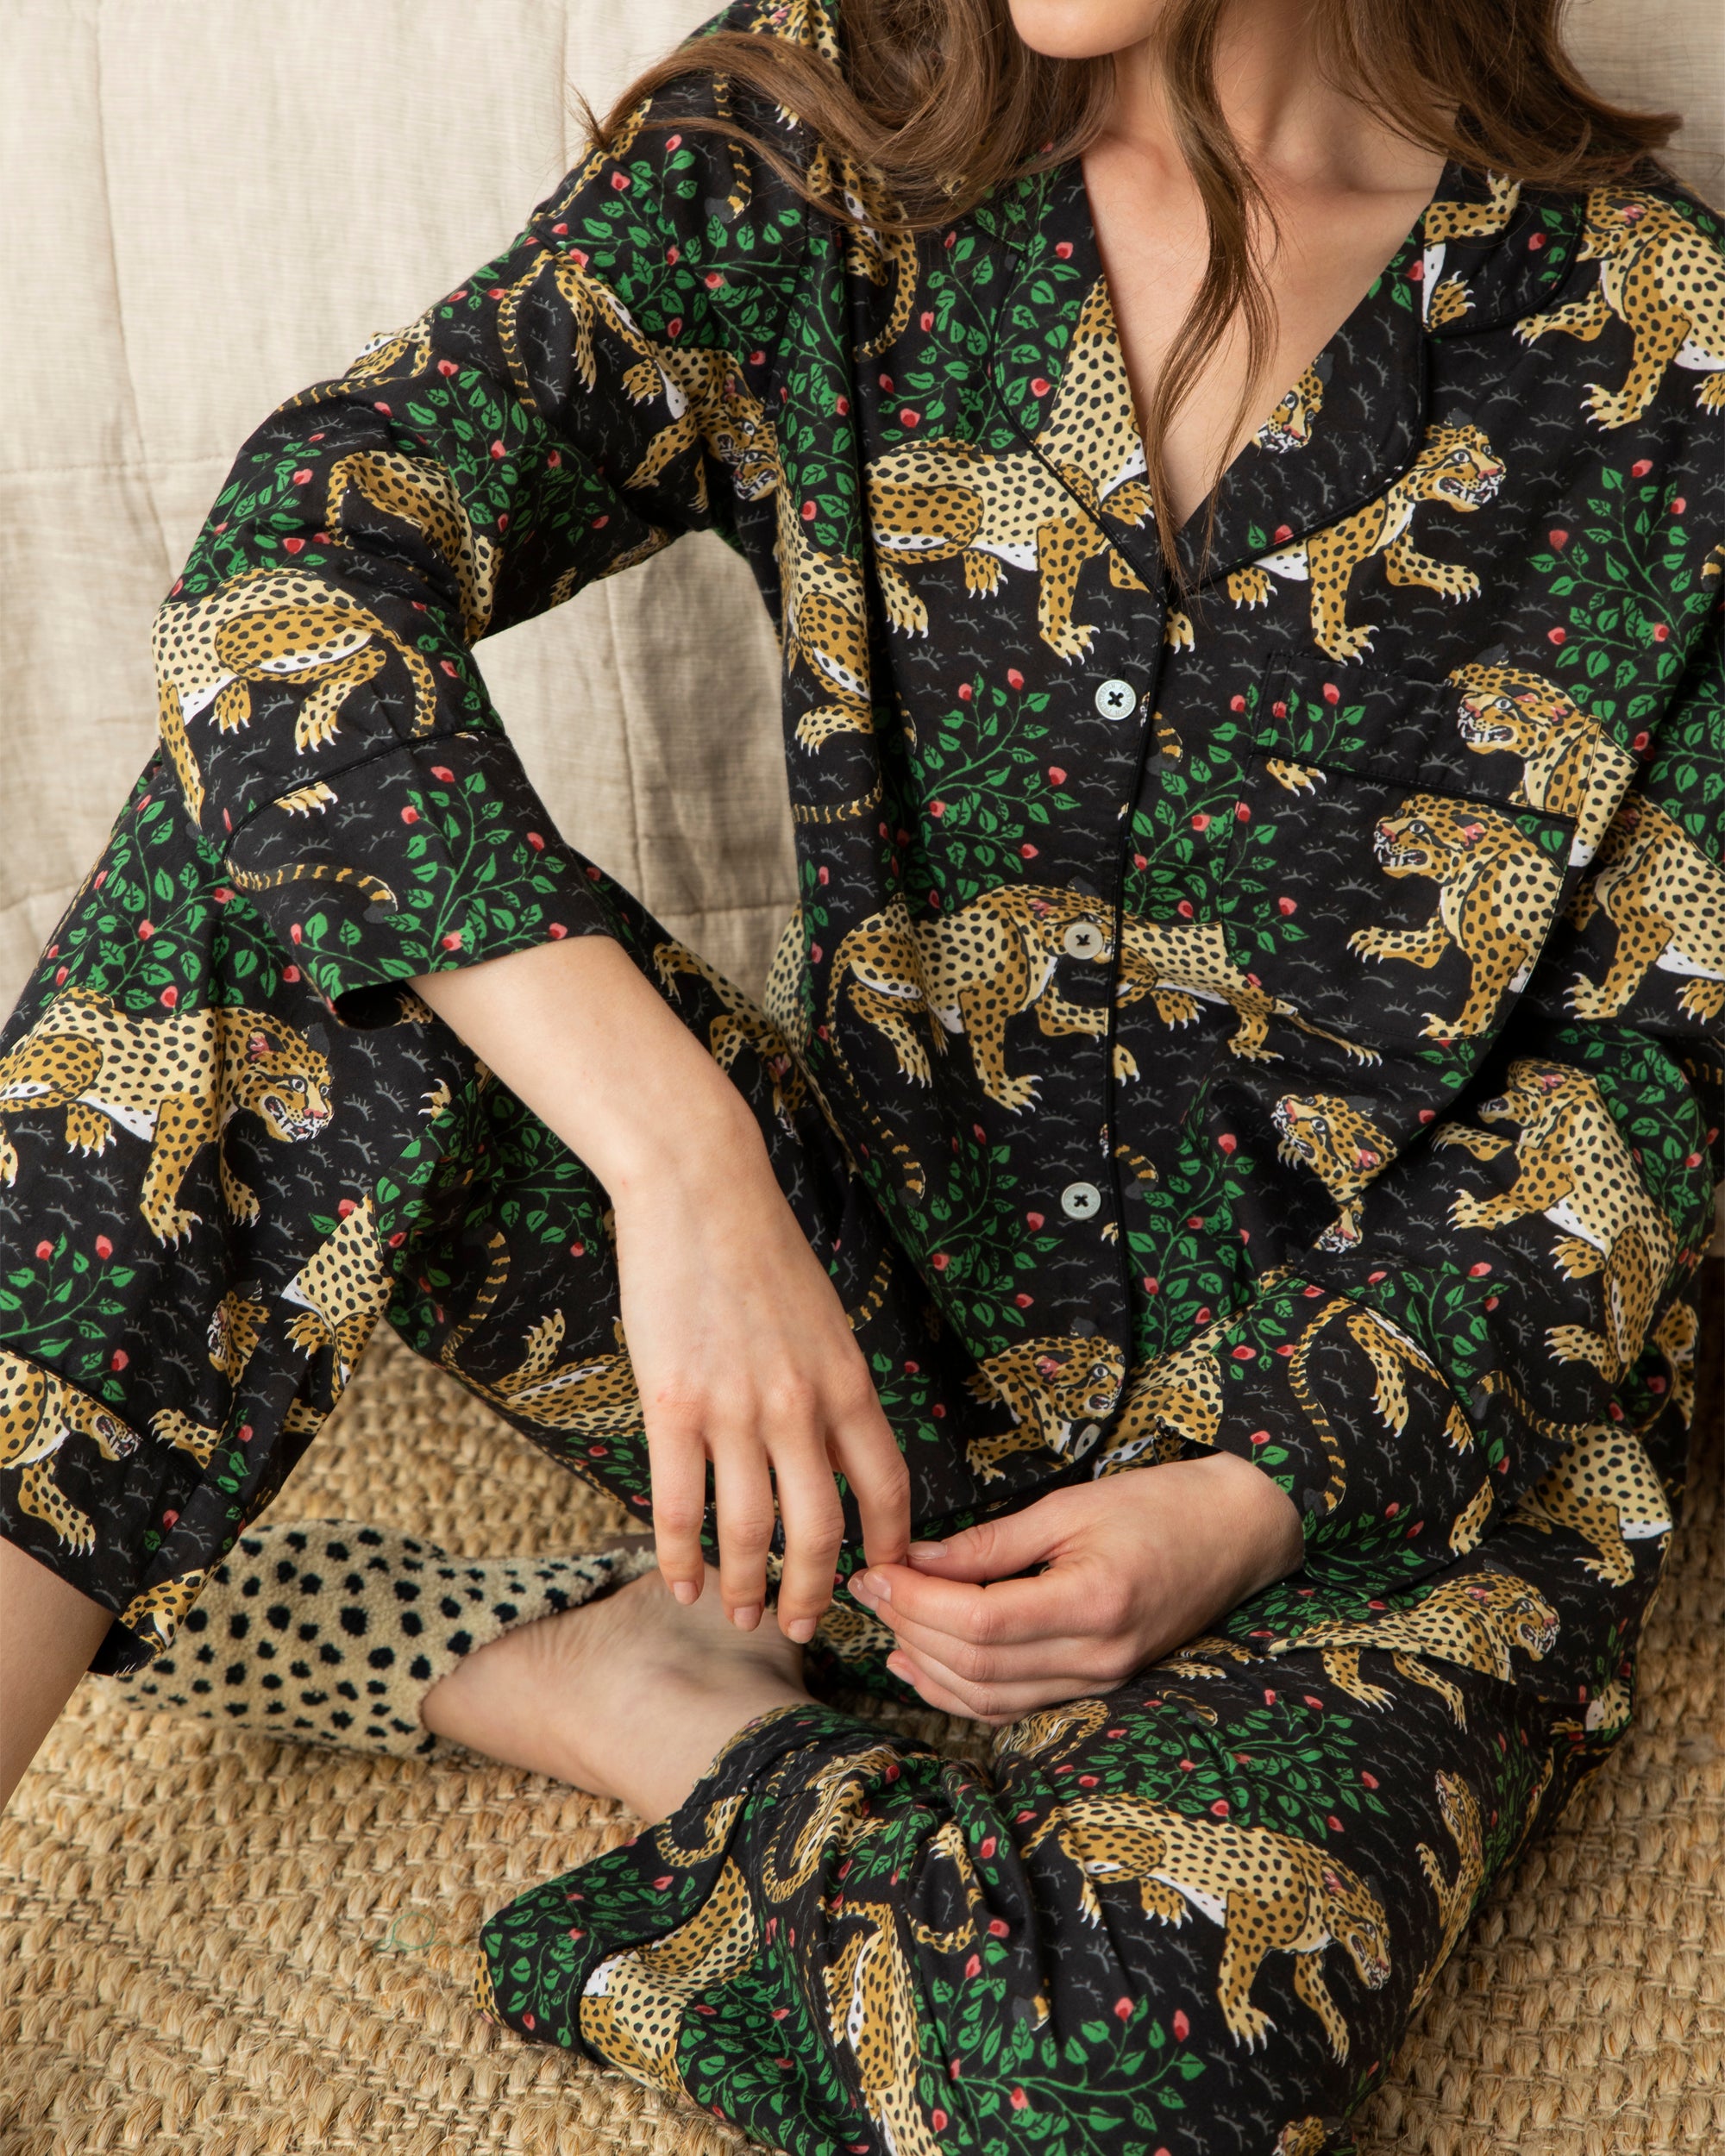 PrintFresh Review: Bagheera Leopard Print Pajamas - C'est Bien by